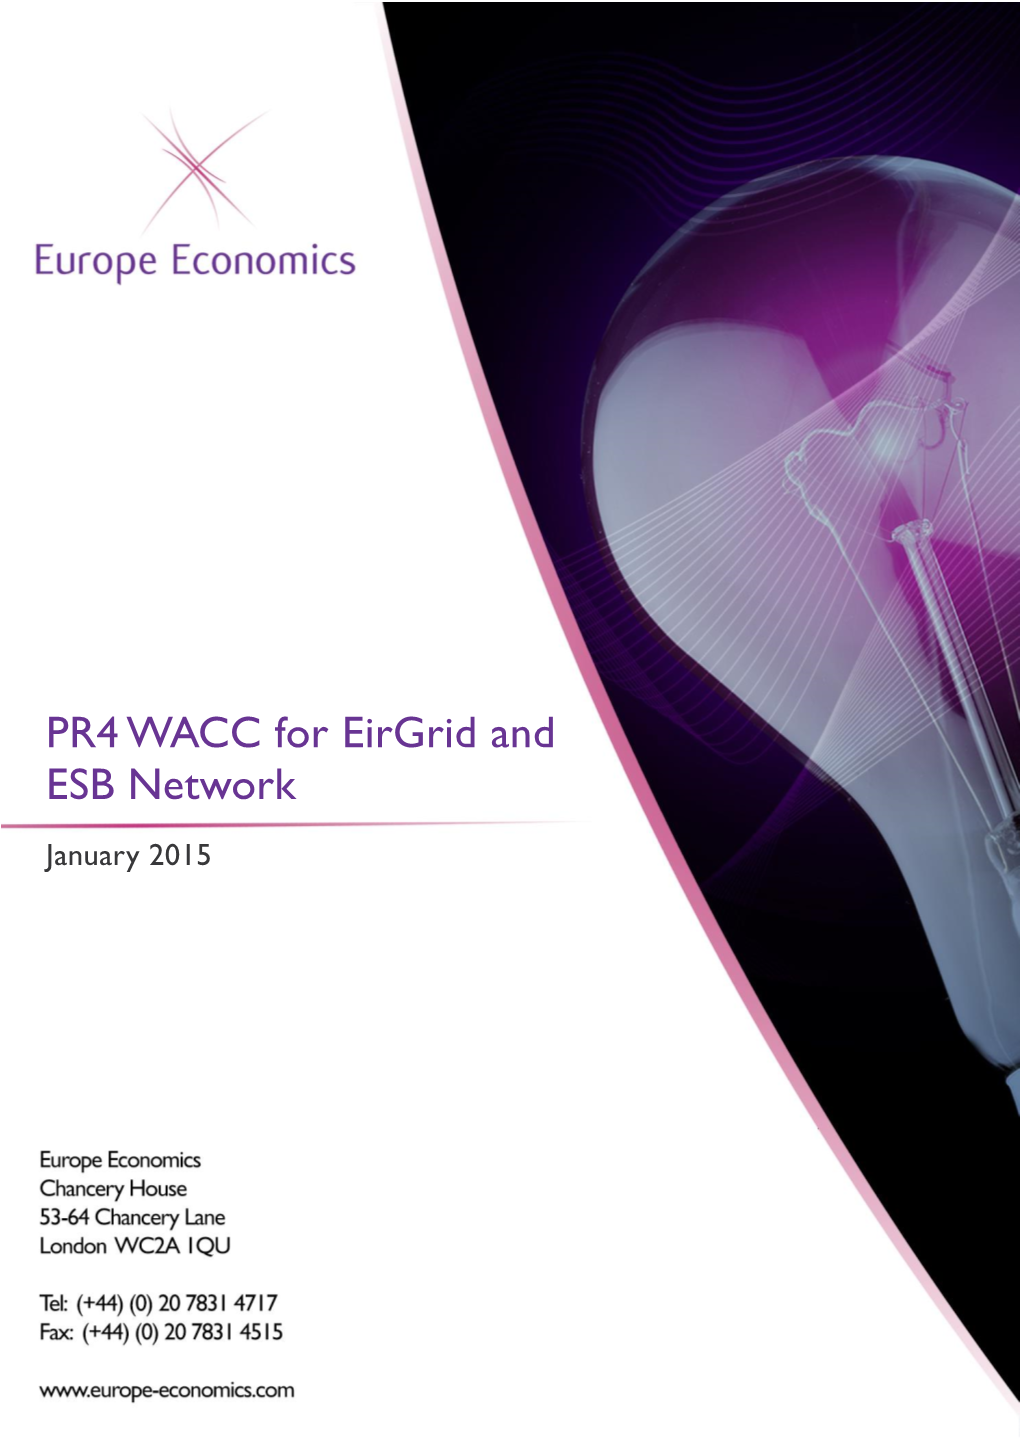 PR4 WACC for Eirgrid and ESB Network